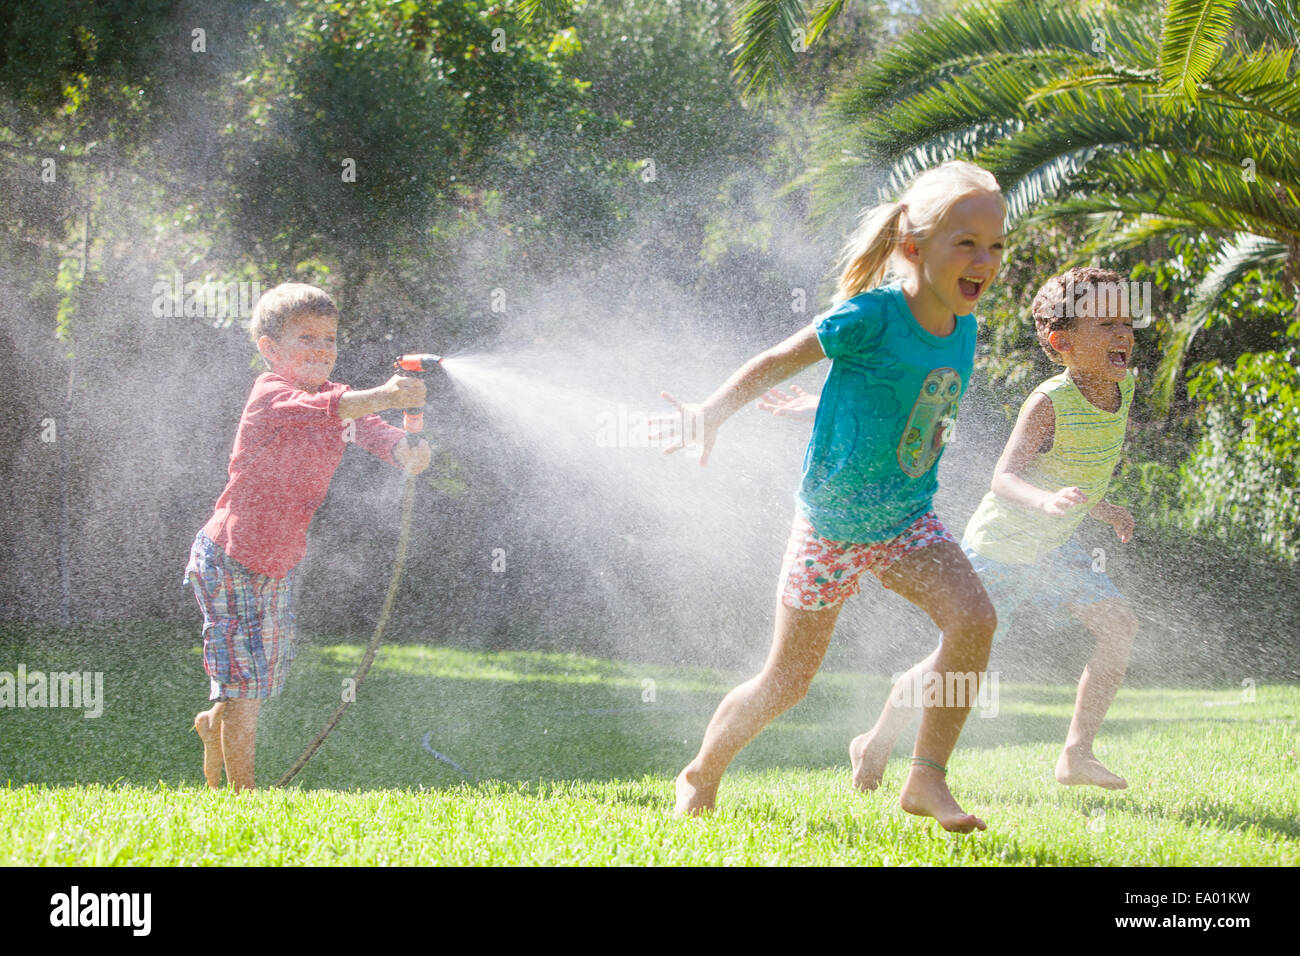 Three children in garden chasing each other with water sprinkler Stock Photo